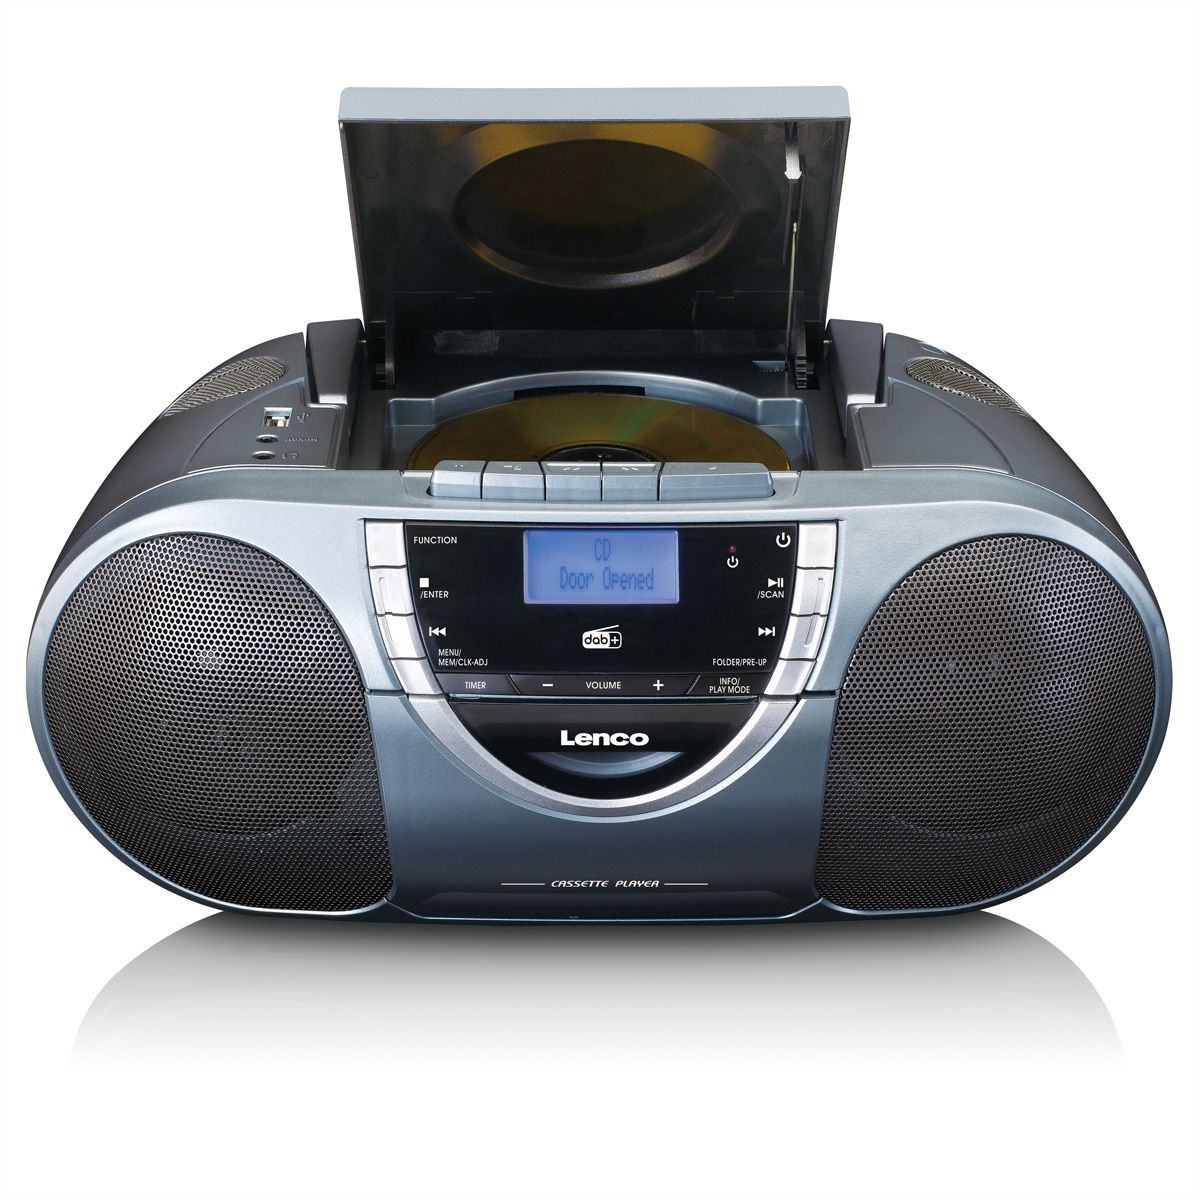 Nederland DAB+, SECOMP SCD-6800, FM, CD/MP3-Player, Lenco - DAB+-Radio/Boombox GmbH Kassette, grau